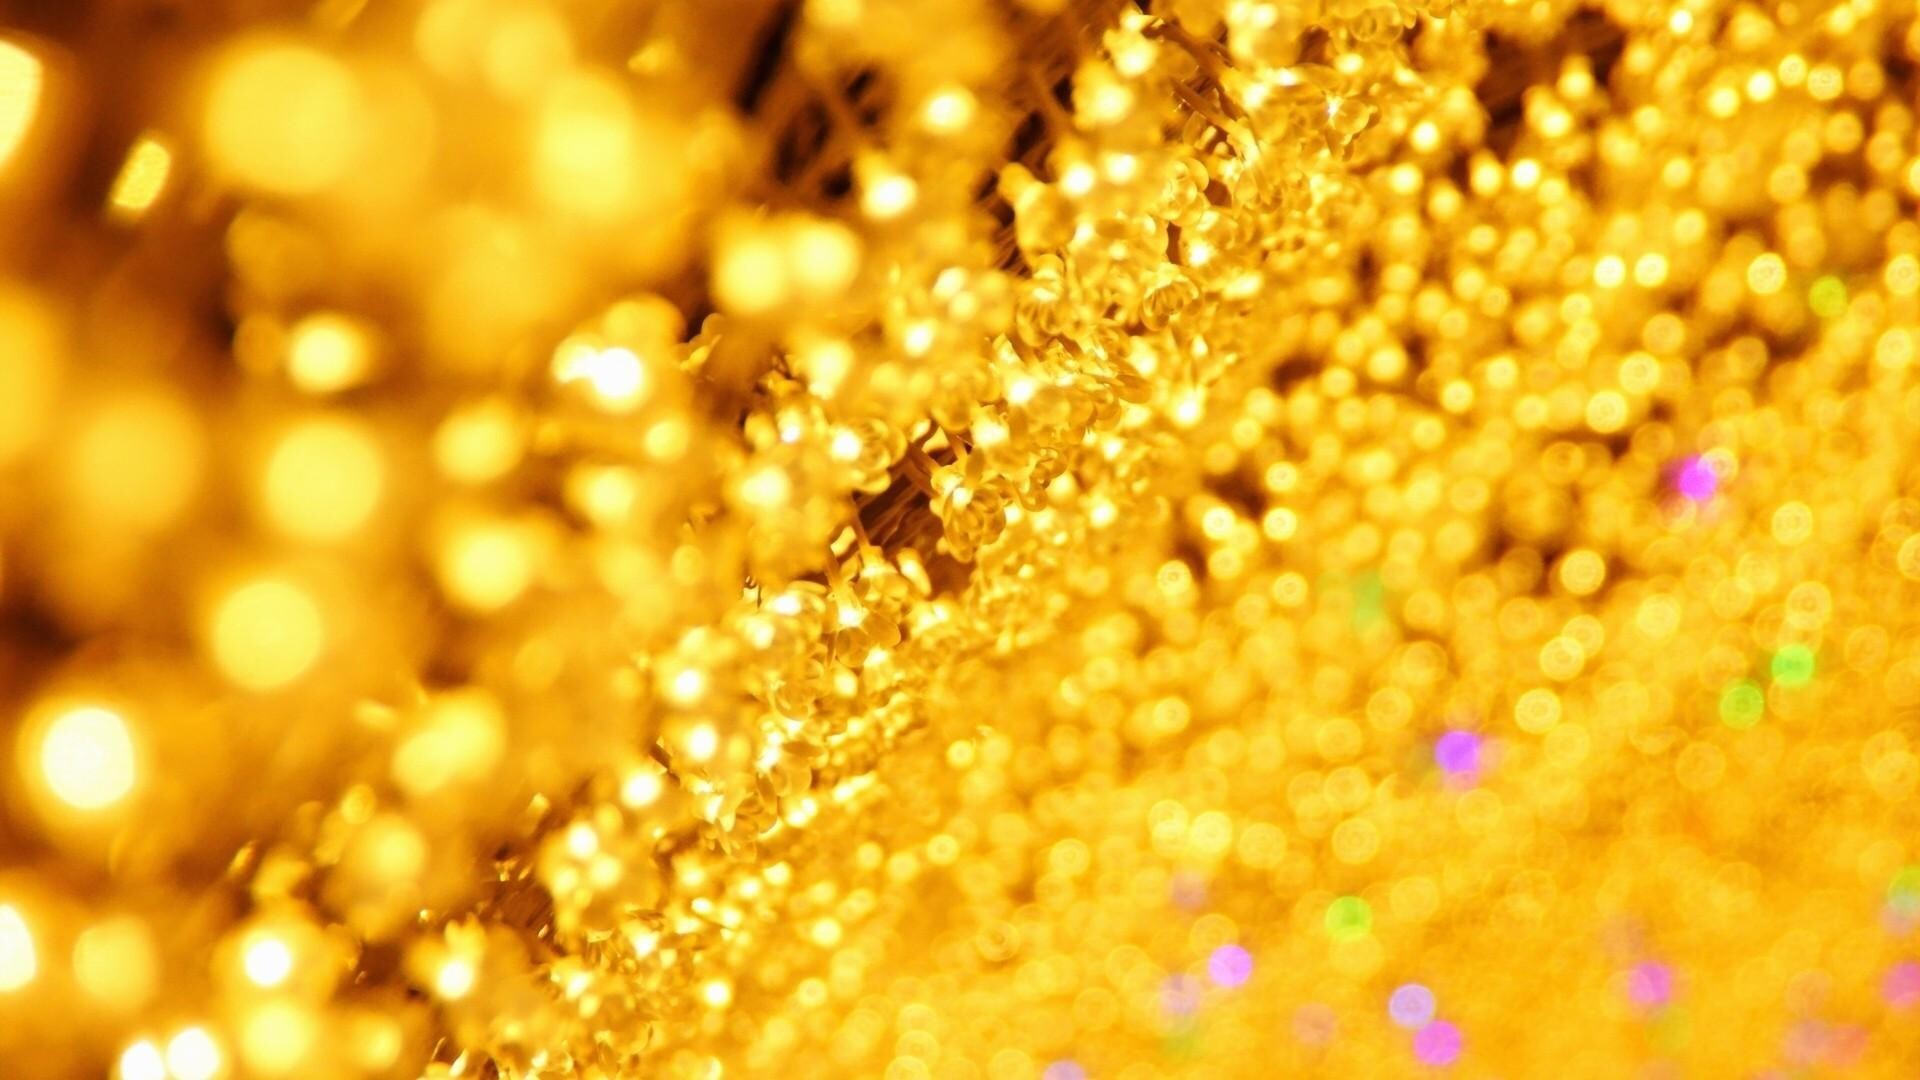 Gold: Glittering metallic powder, Small golden pieces of uniform shape, Shimmer. 1920x1080 Full HD Wallpaper.